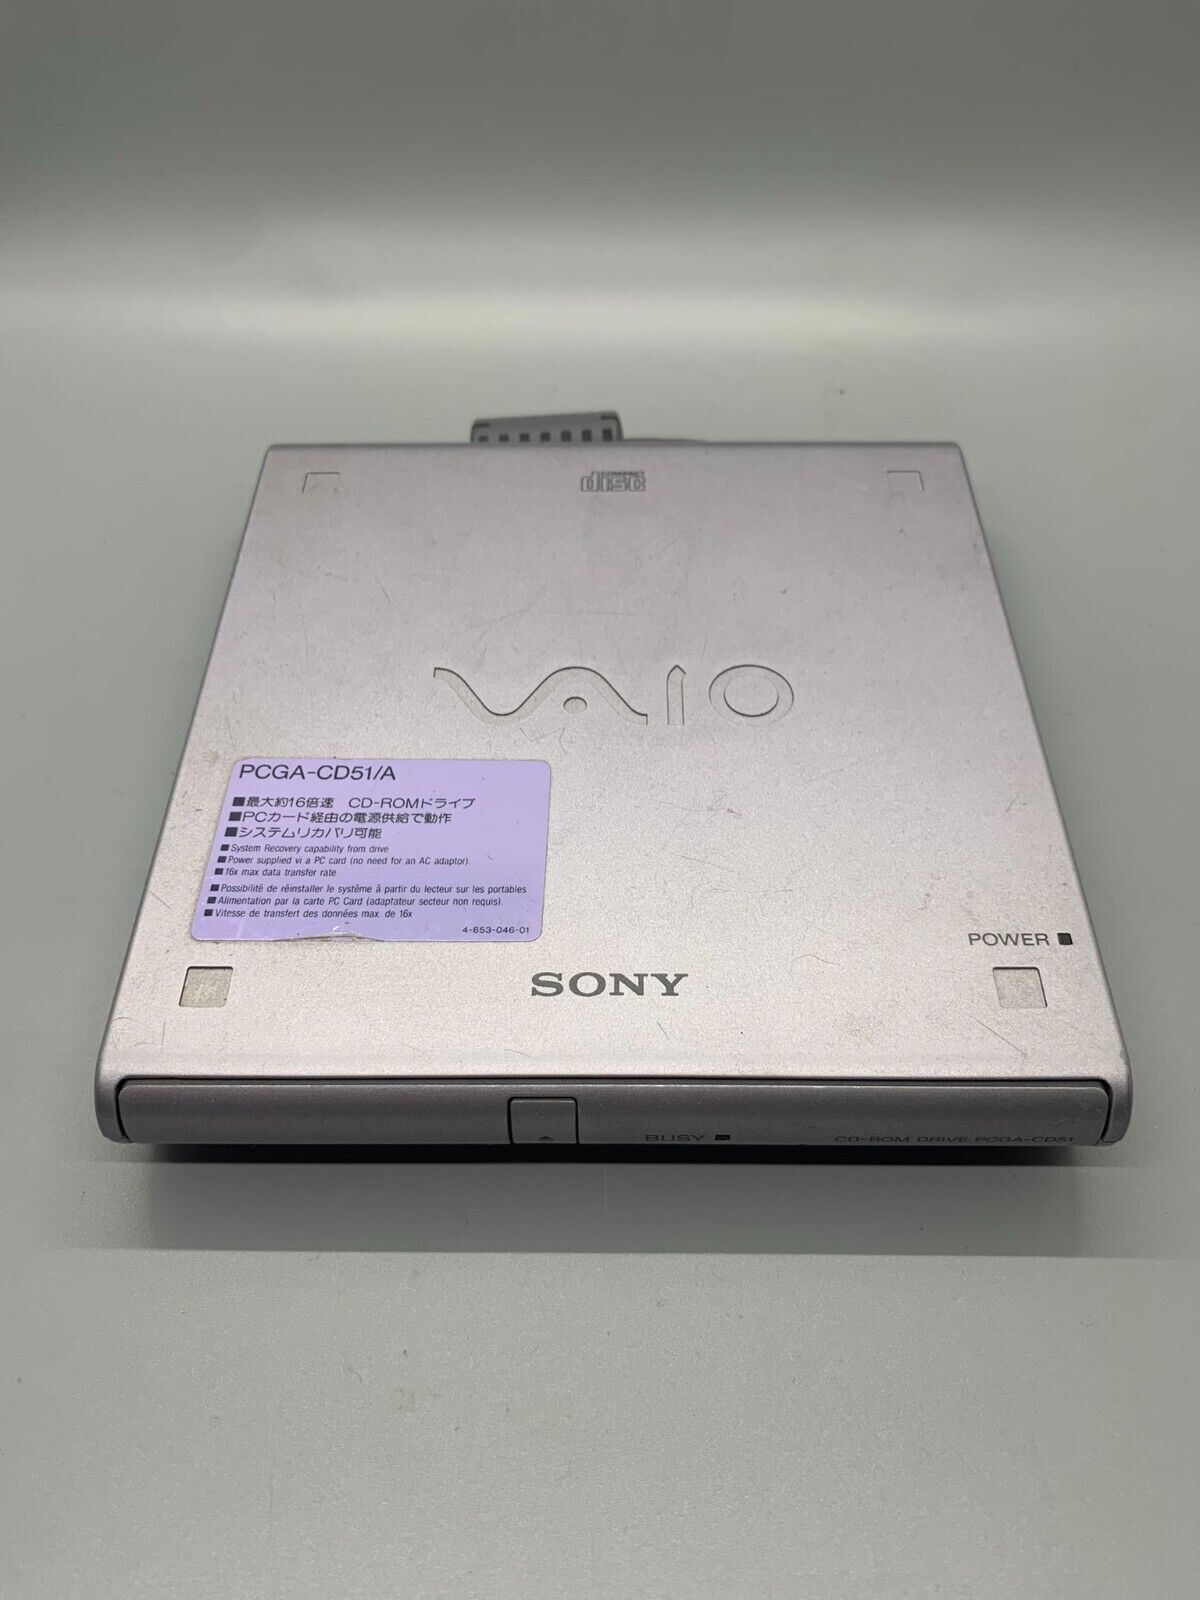 SONY VAIO PCGA-CD51 External Portable CD-ROM Drive Used